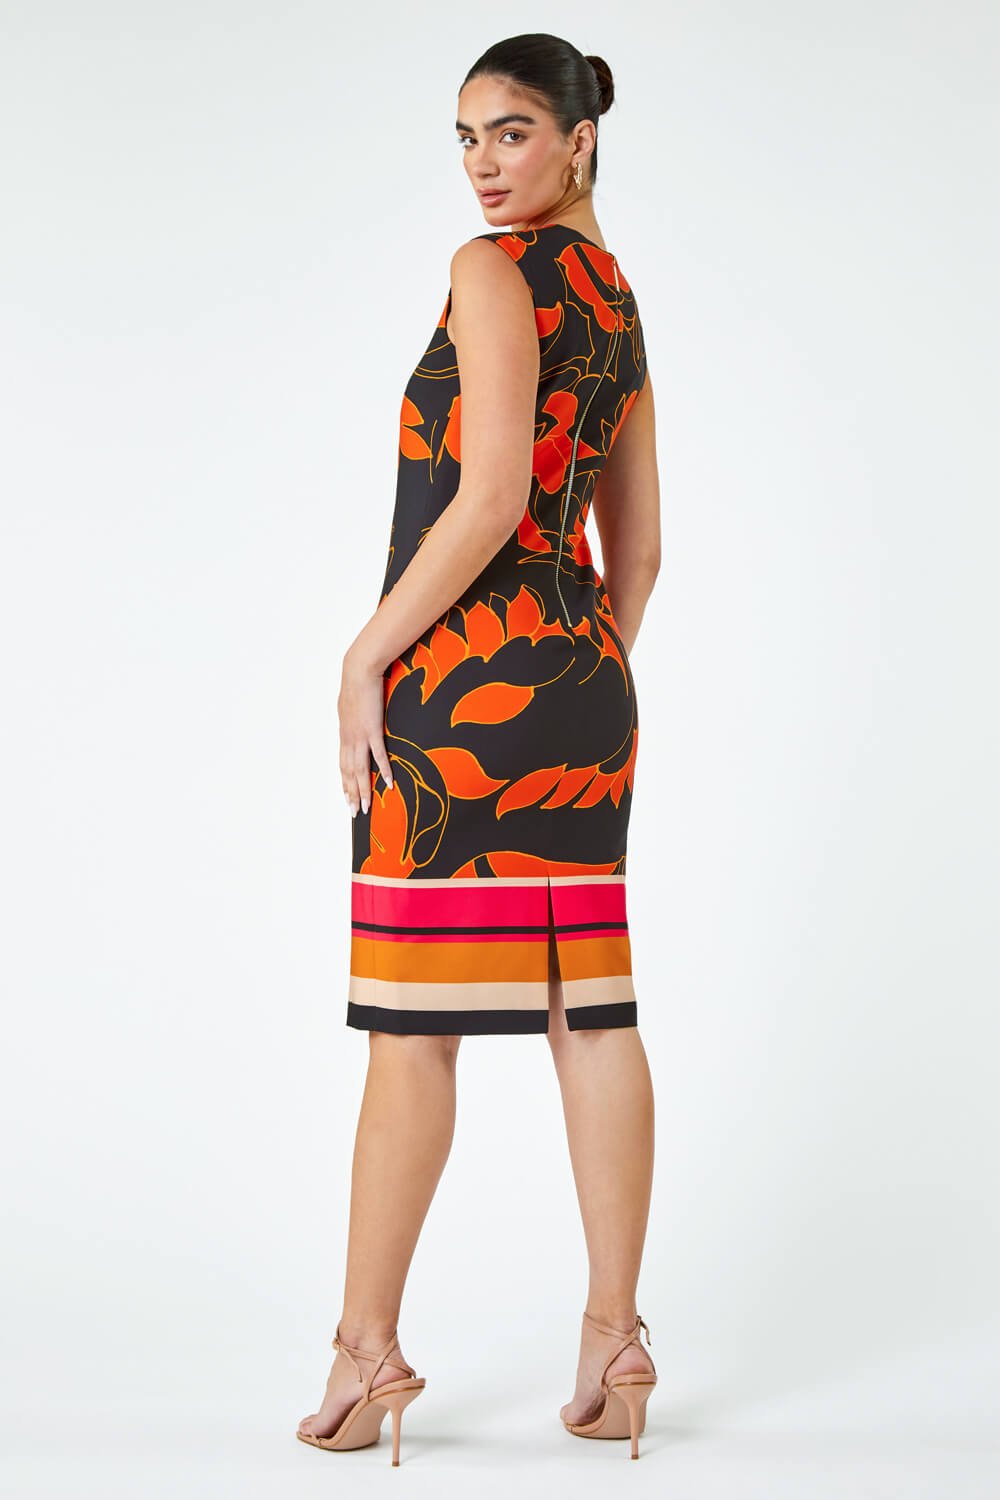 ORANGE LIMITED Floral Print Premium Stretch Dress, Image 3 of 5